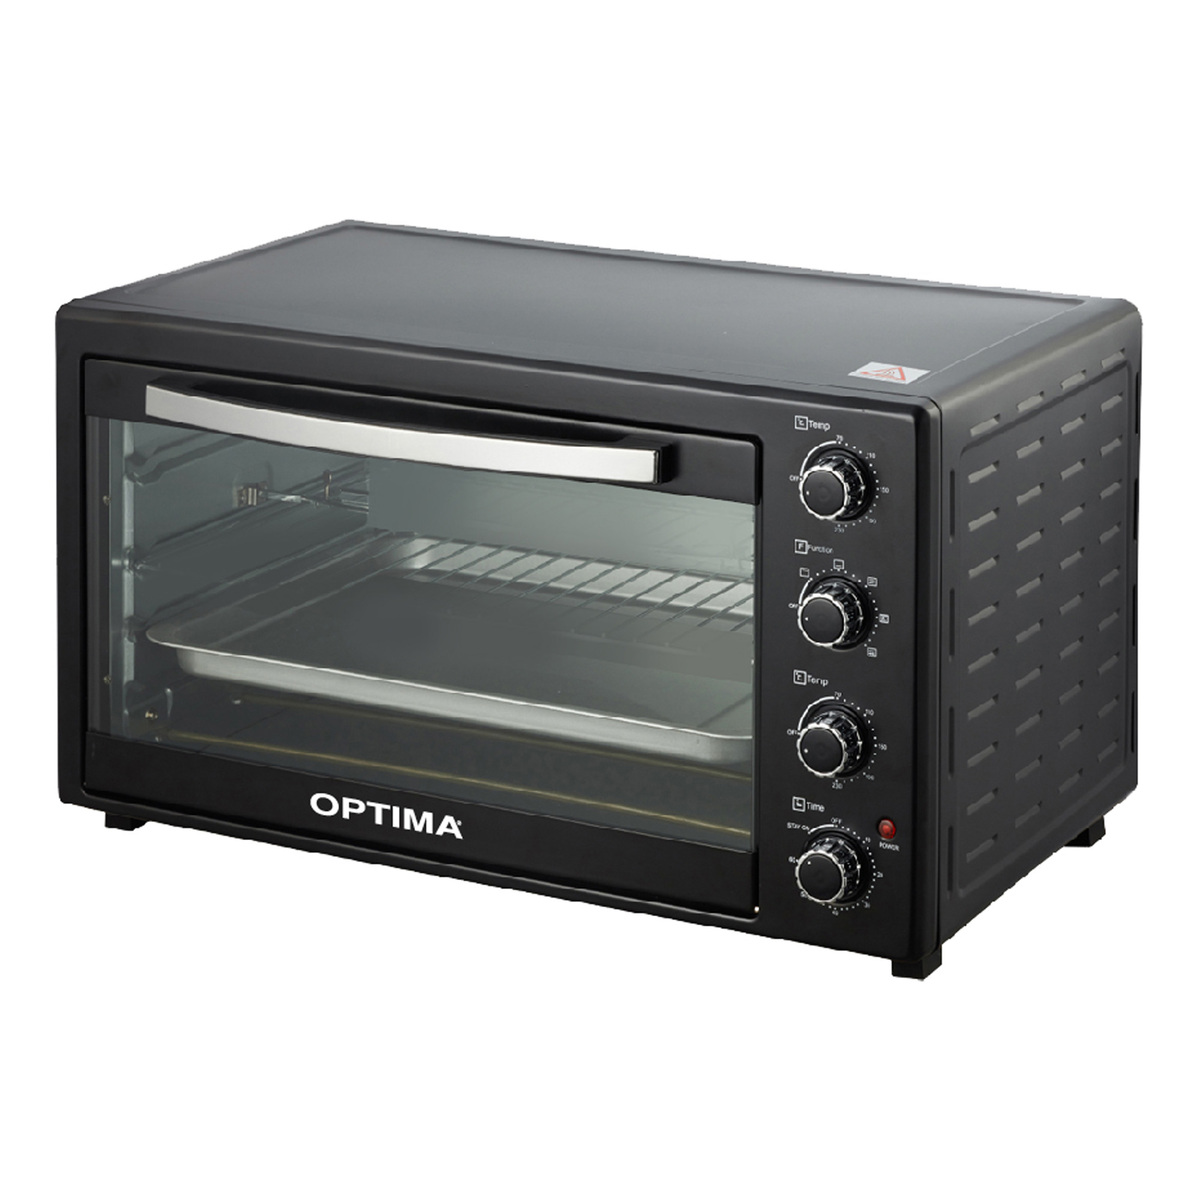 Optima Oven Toaster OT 600 60 Litre